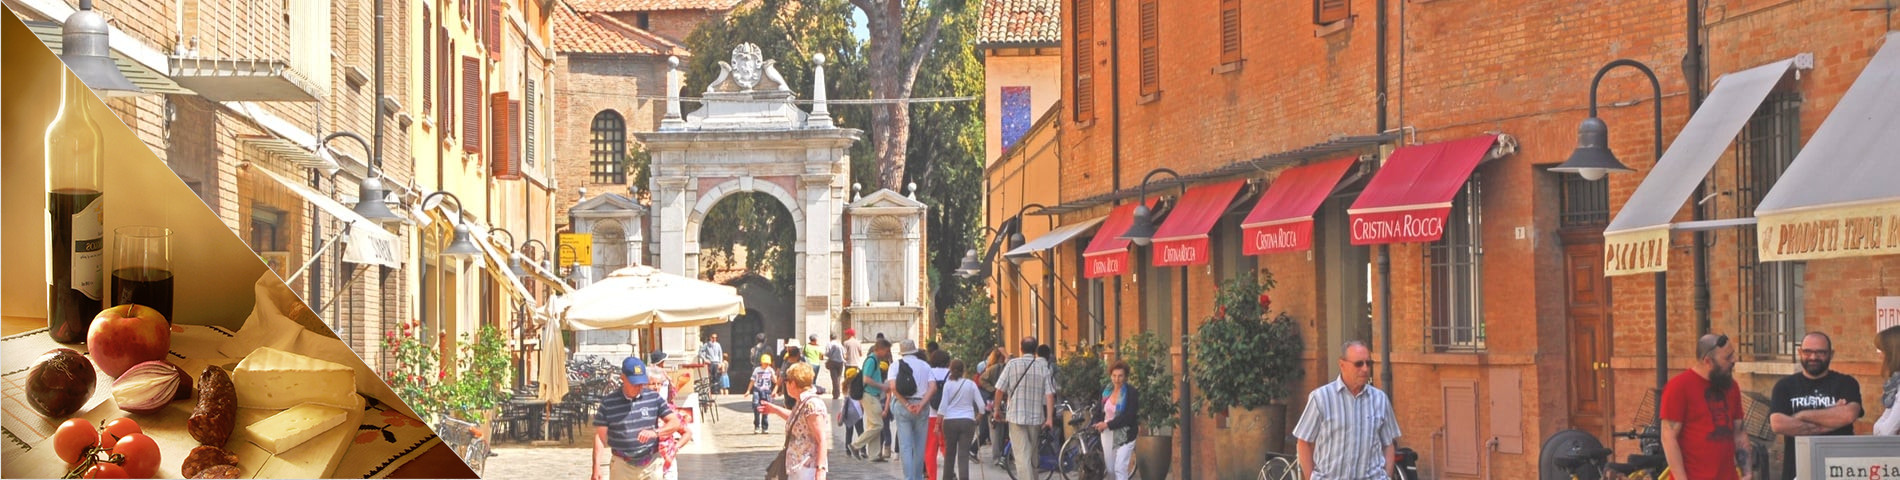 Ravenna - Italian & Culture